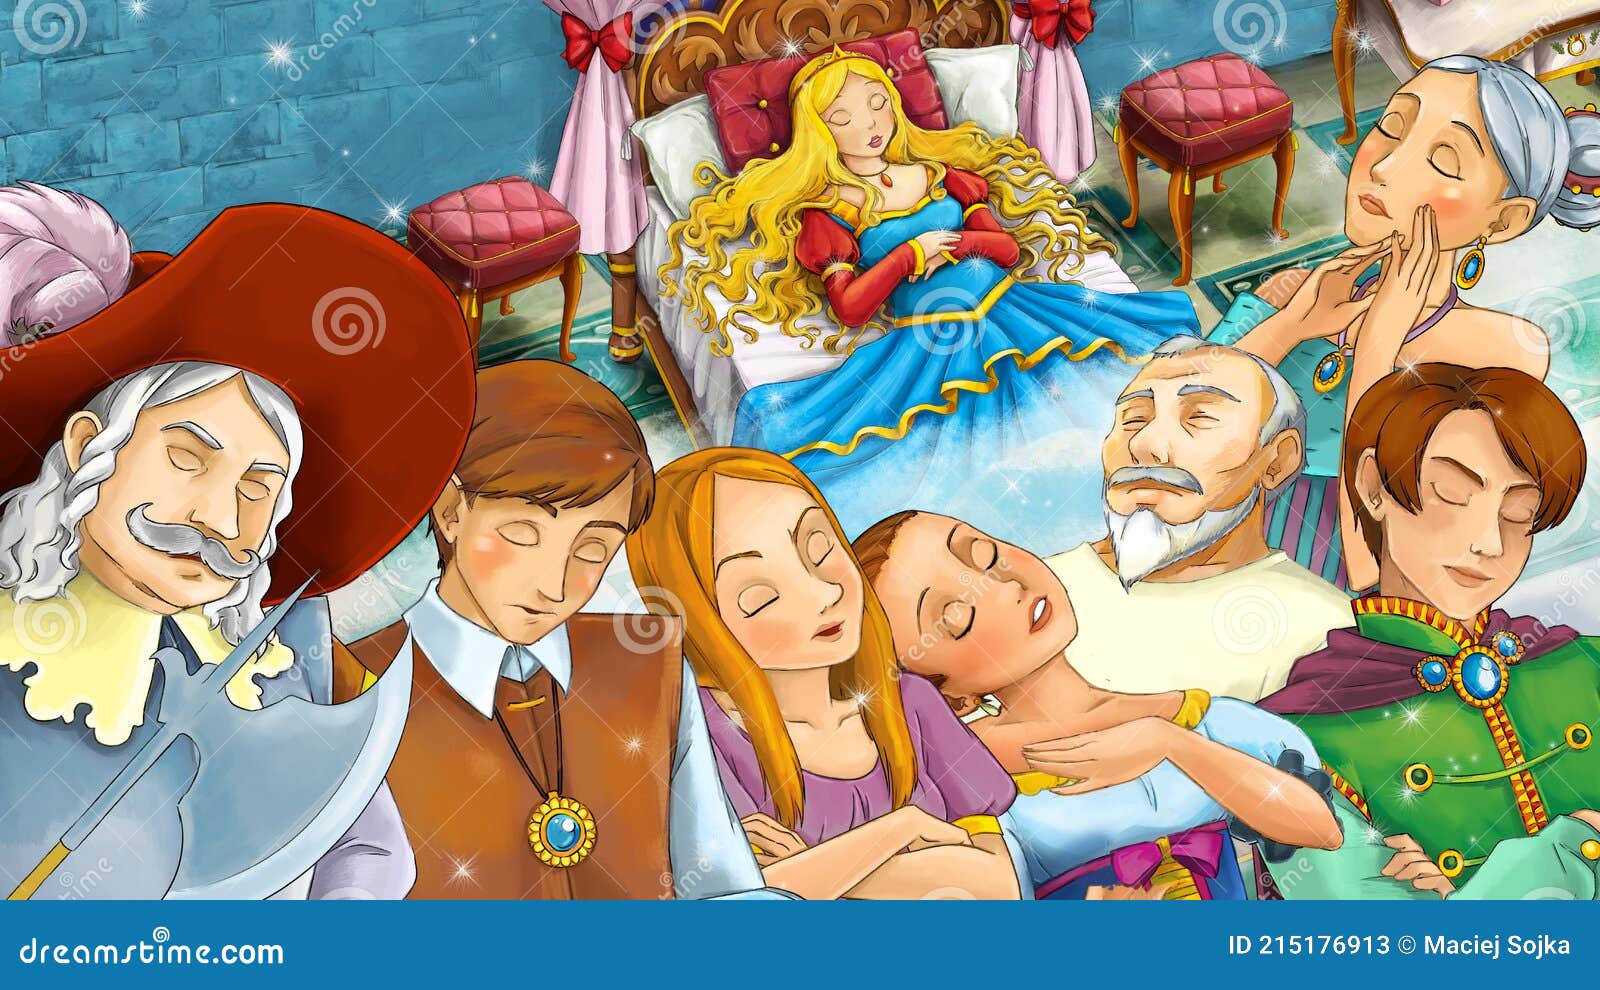 Cartoon Fairy Tale Scene with Princess King and Knights Sleeping  Illustration Stock Illustration - Illustration of joyful, funny: 215176913